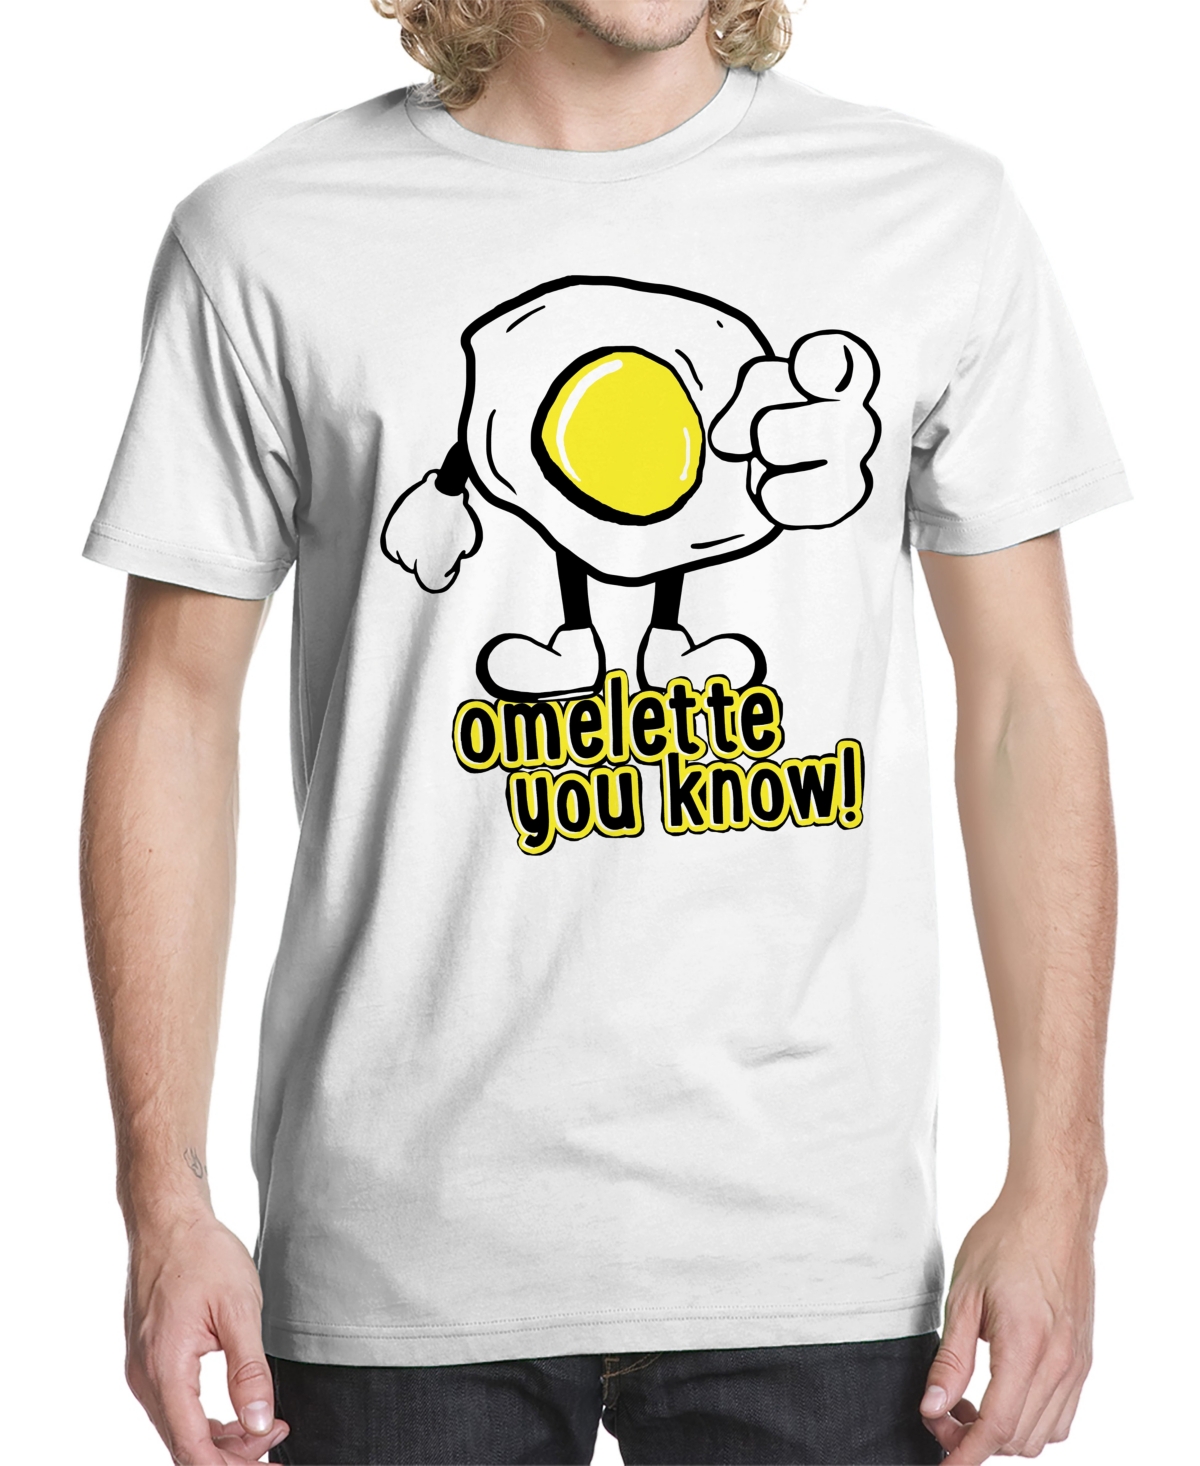 Men's Omelette You Know V1 Graphic T-shirt - White